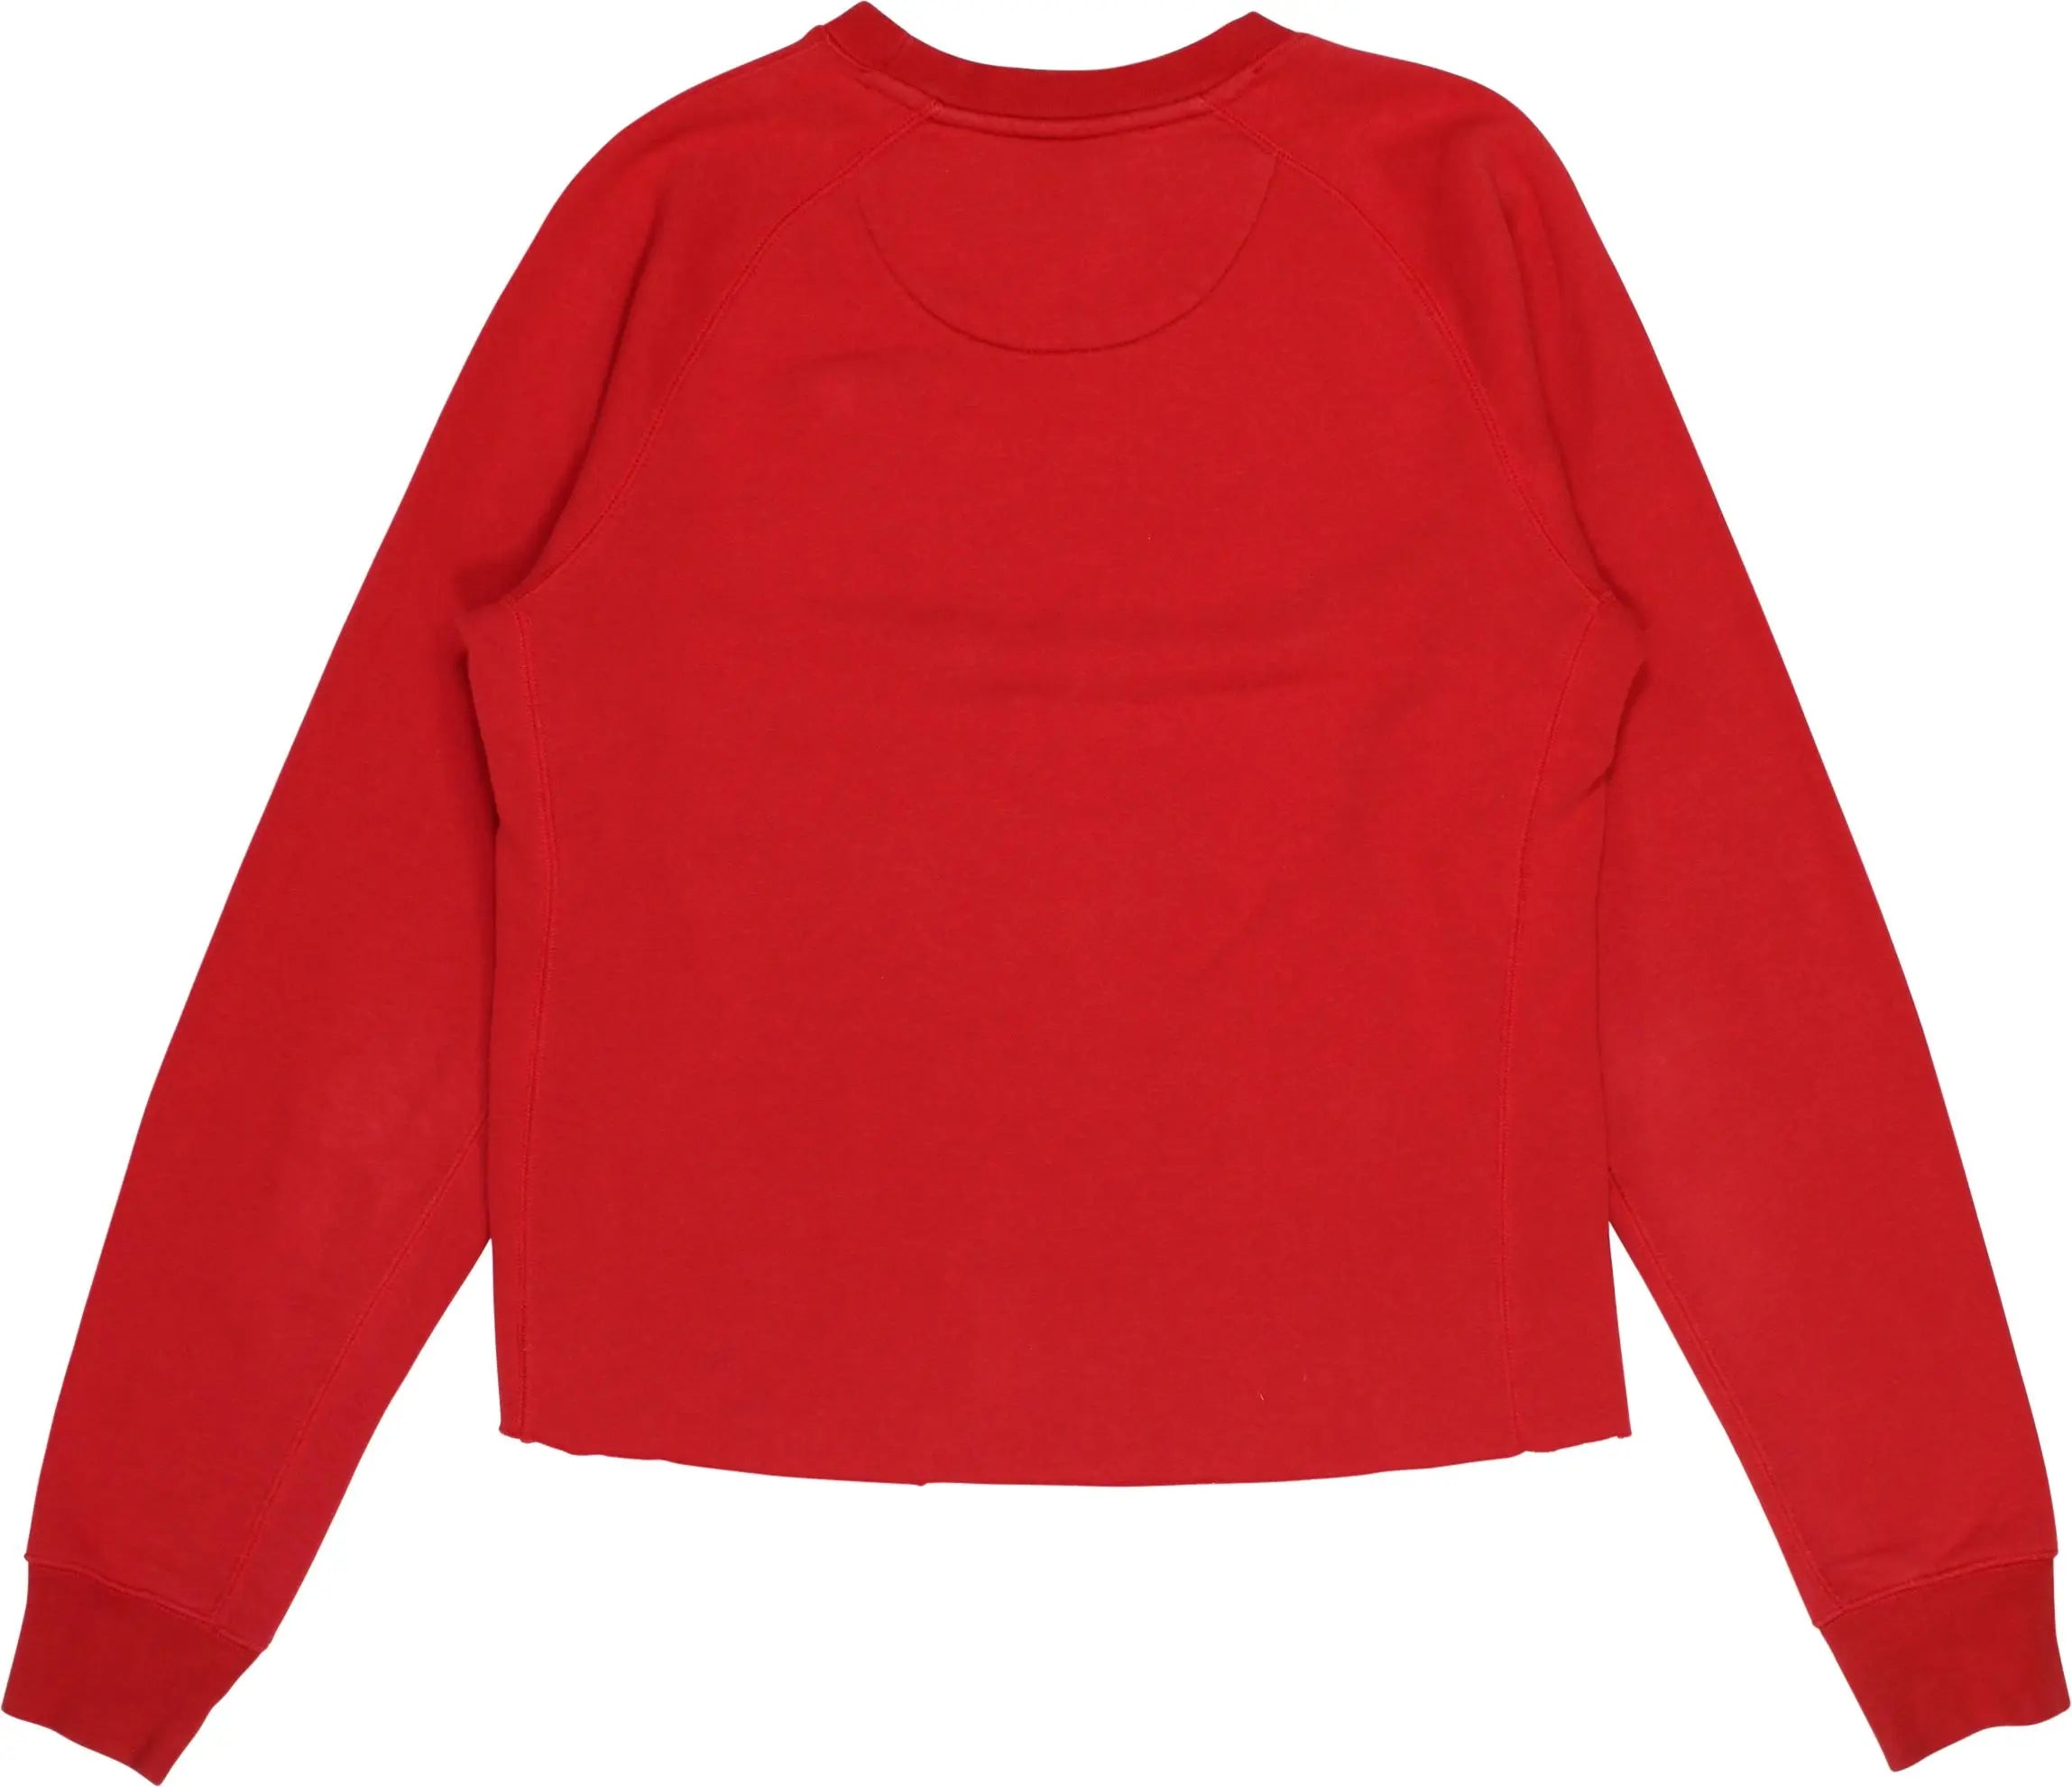 Nike - Red Nike Jordan Sweatshirt- ThriftTale.com - Vintage and second handclothing